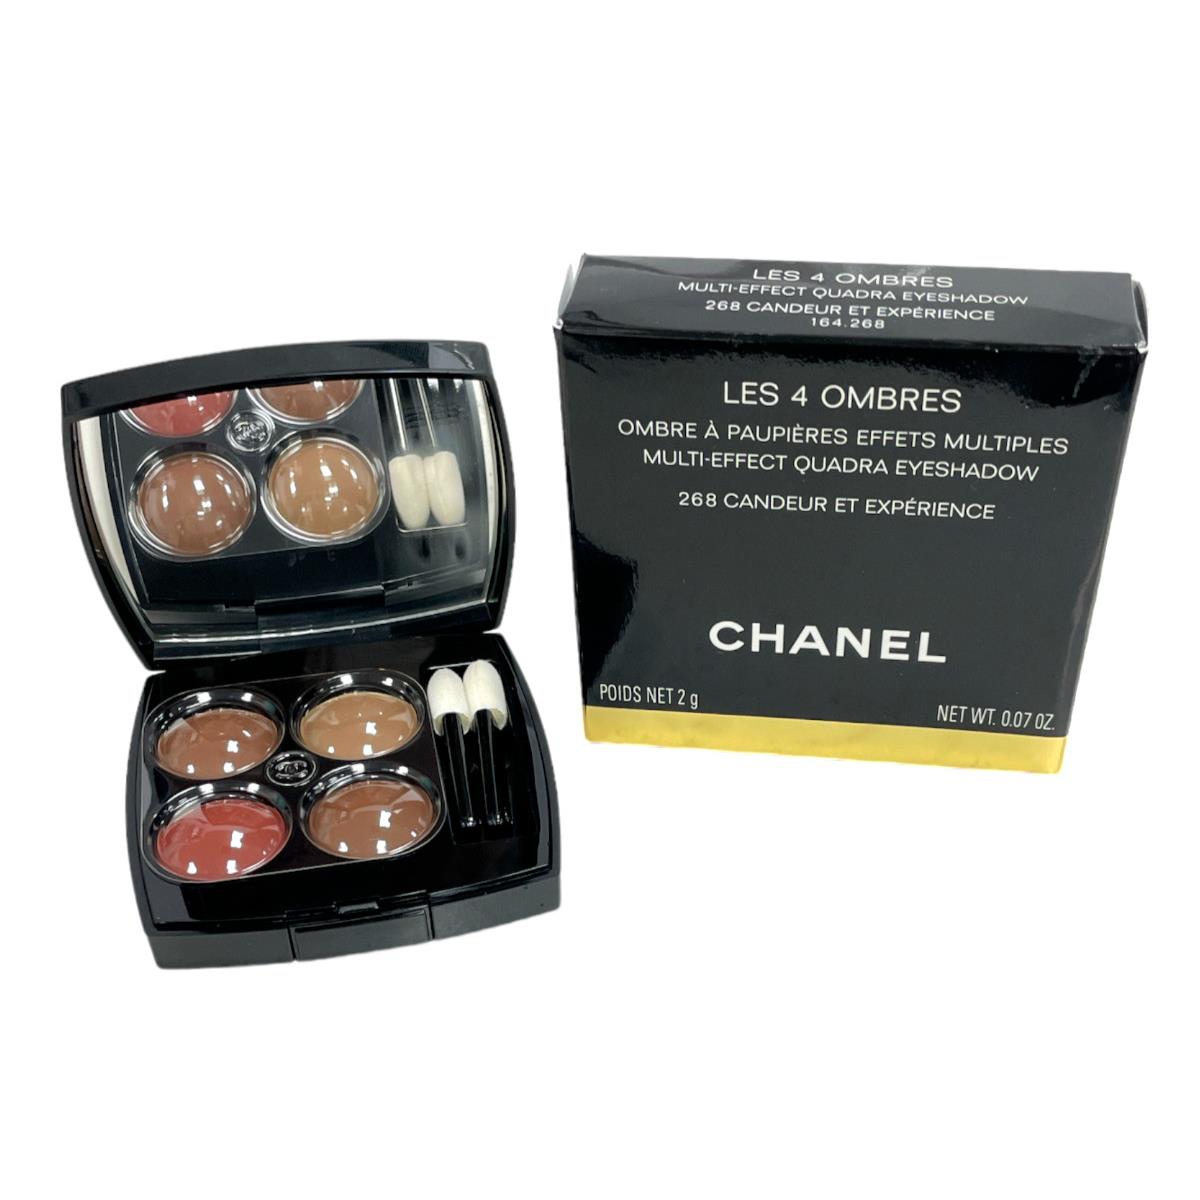 Chanel Les 4 Ombres Multi Effect Quadra Eyeshadow 268 2g/0.07oz w/ Box